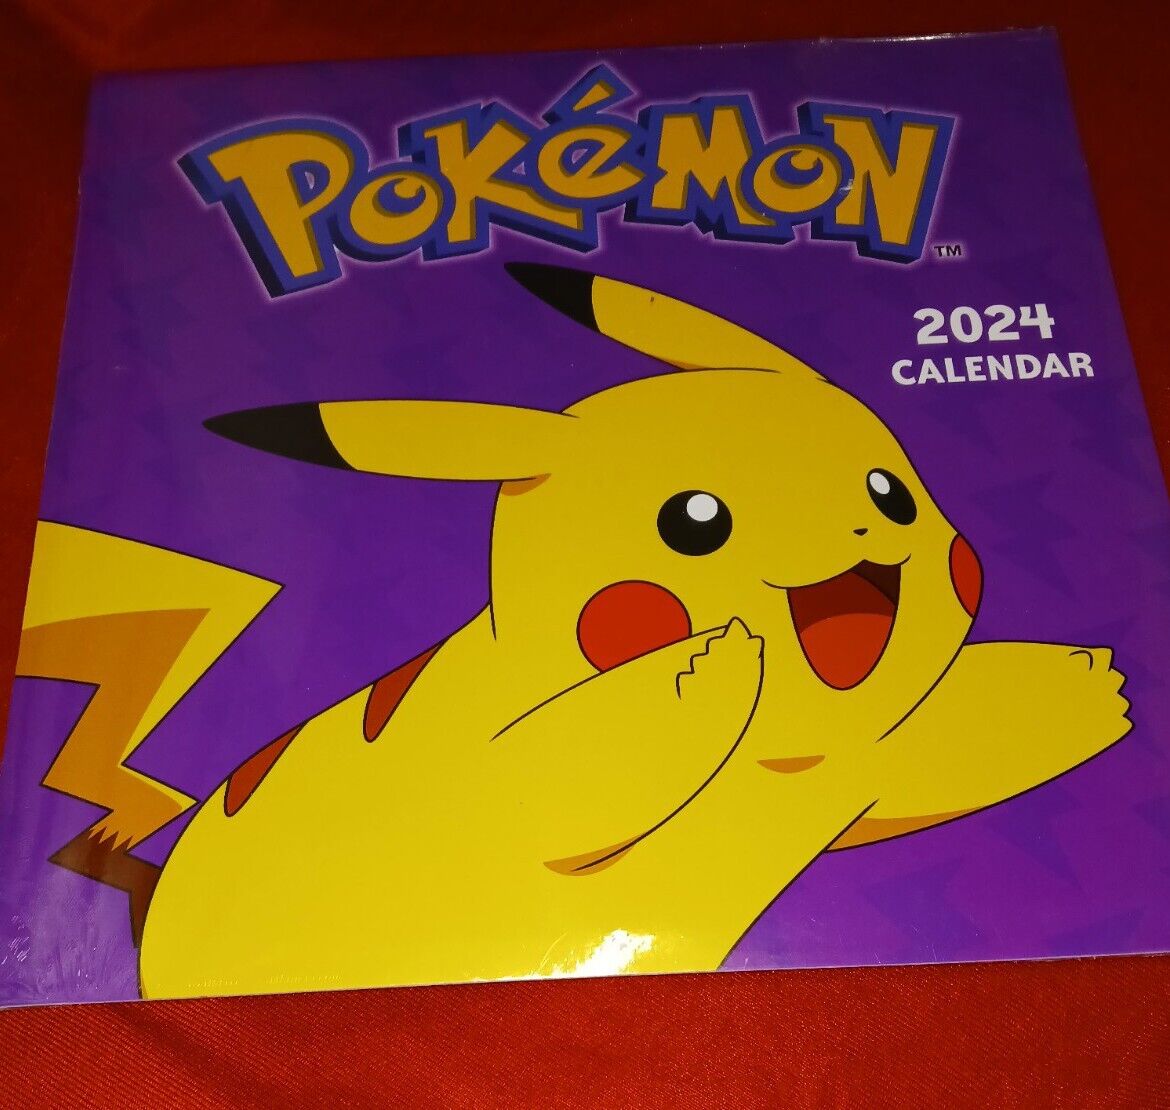 Pokémon 2024 12x24 Large Wall Calendar. Collectors Item. New Sealed.